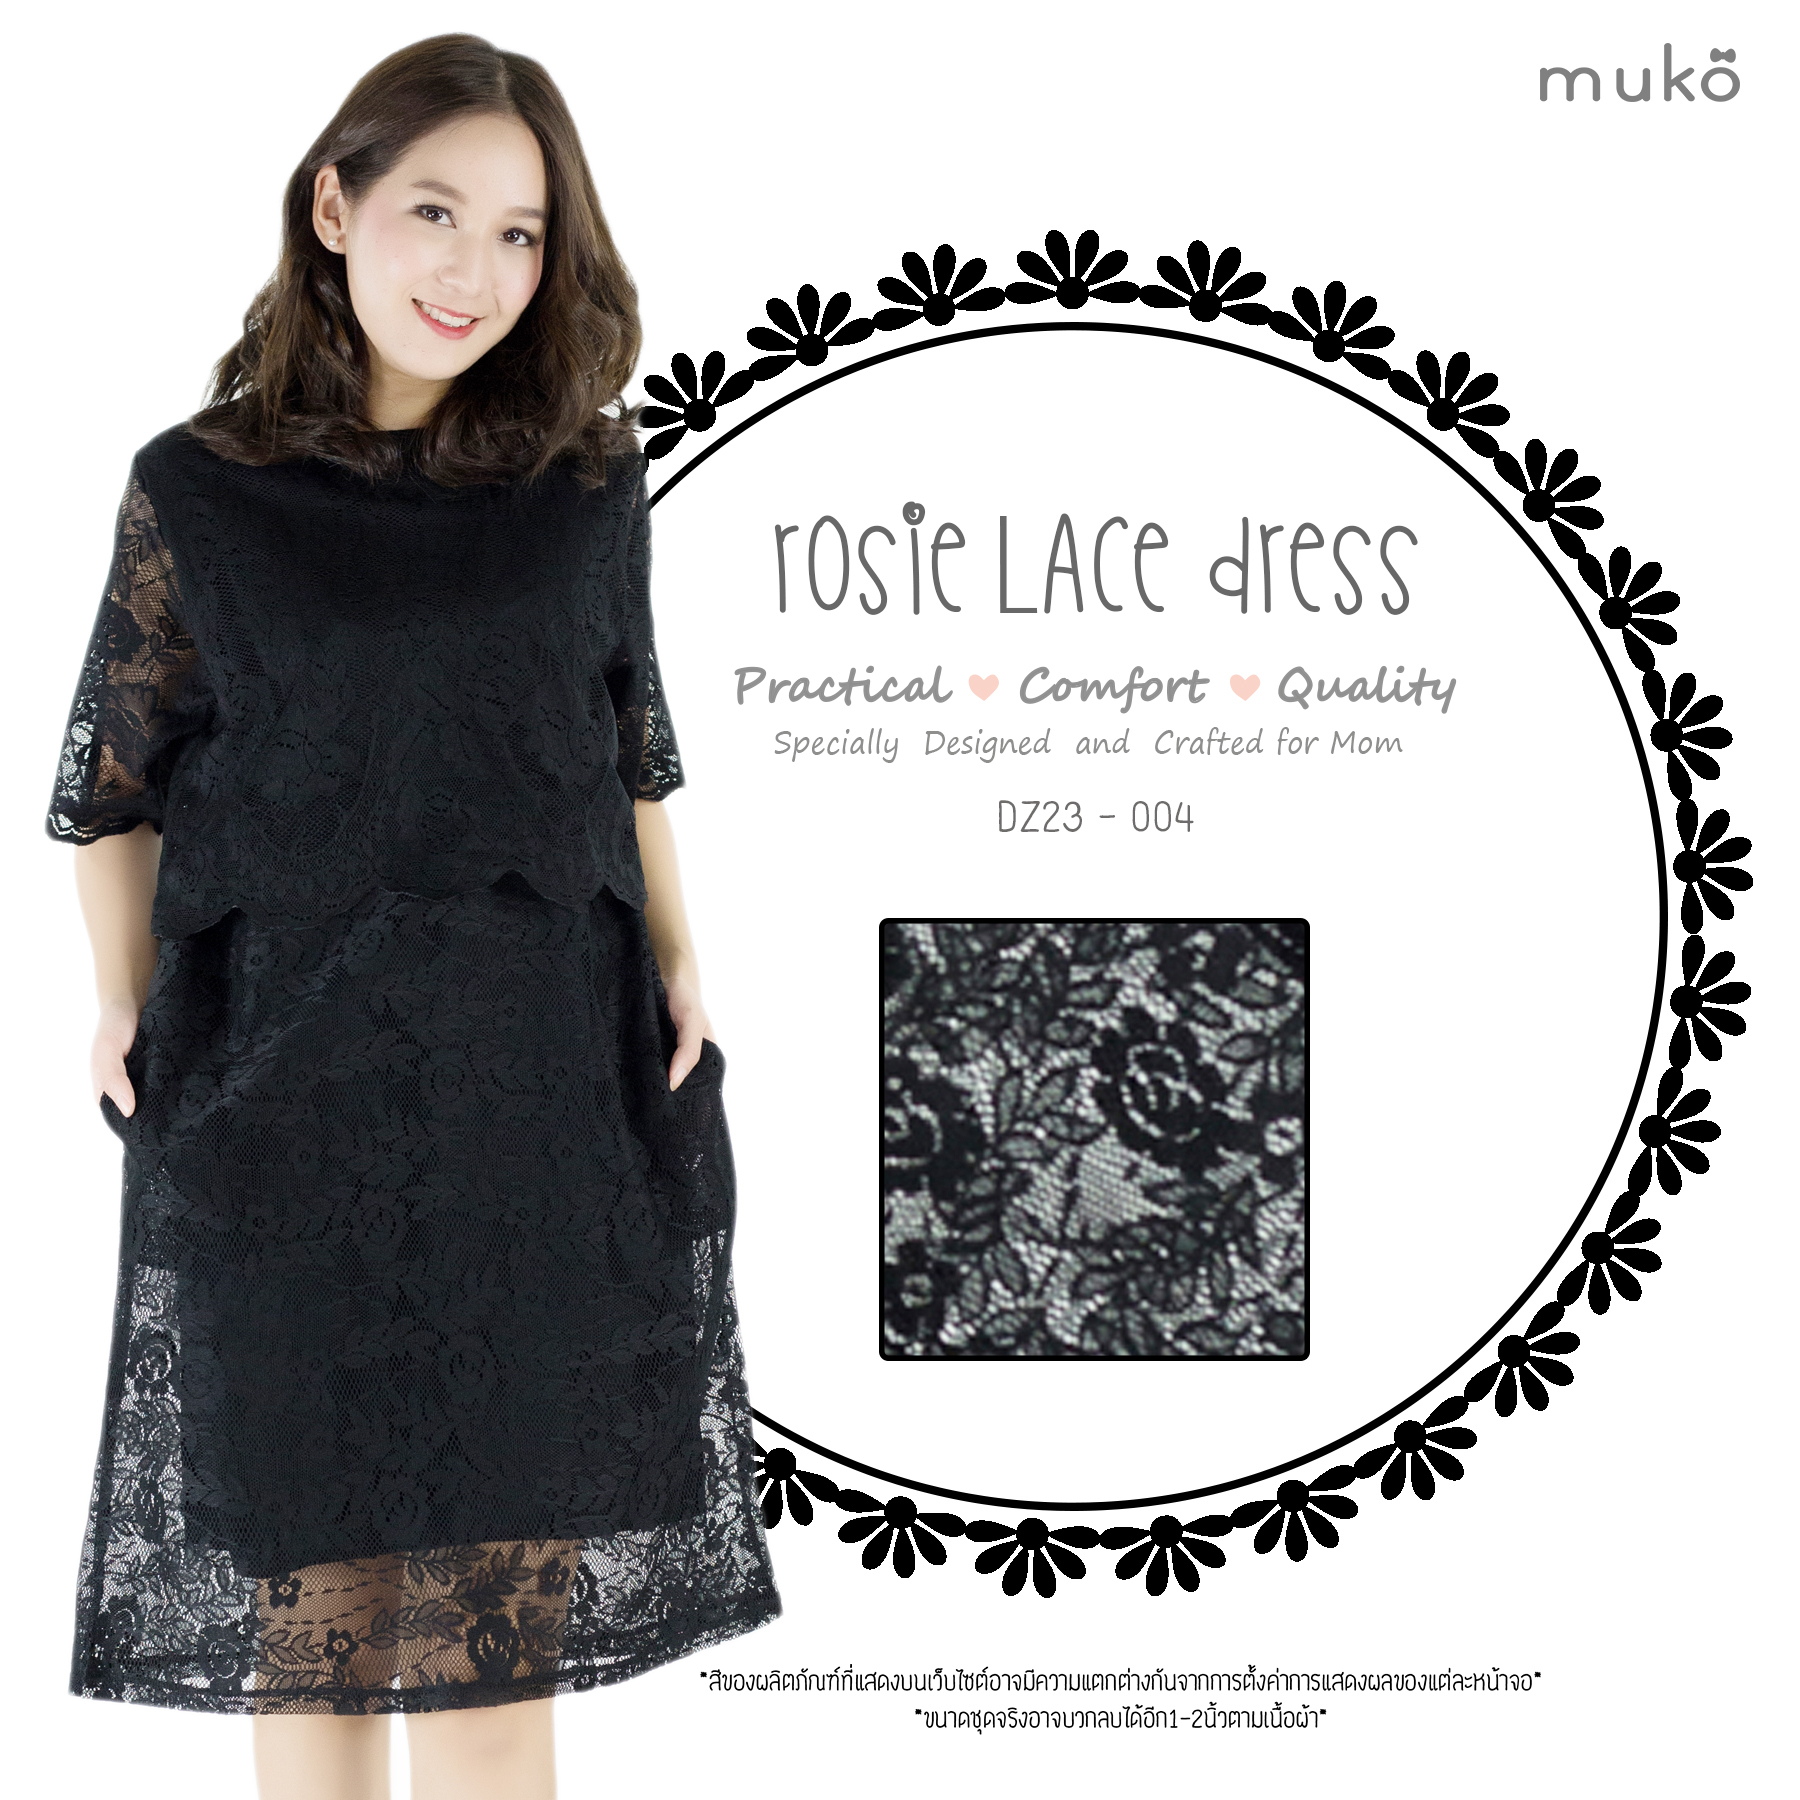 Muko Rosie Lace Dress เดรสเปิดให้นม คลุมท้อง DZ23-004 สีดำ